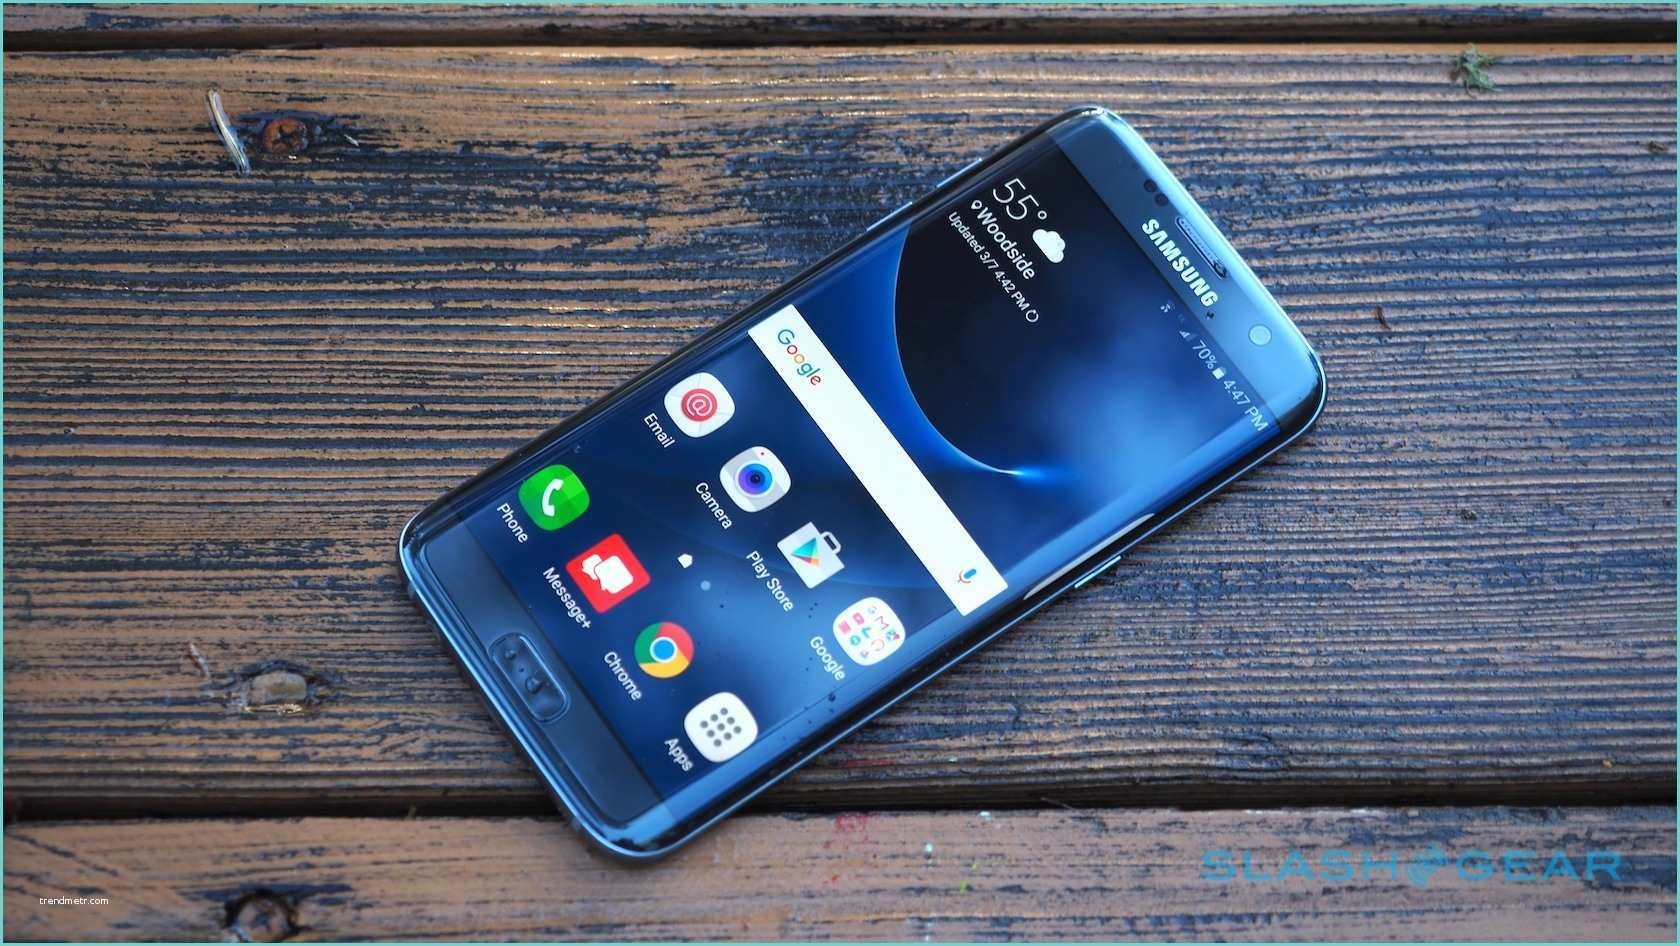 Mediaworld Samsung S7 Edge Samsung Galaxy S7 Edge Review Slashgear